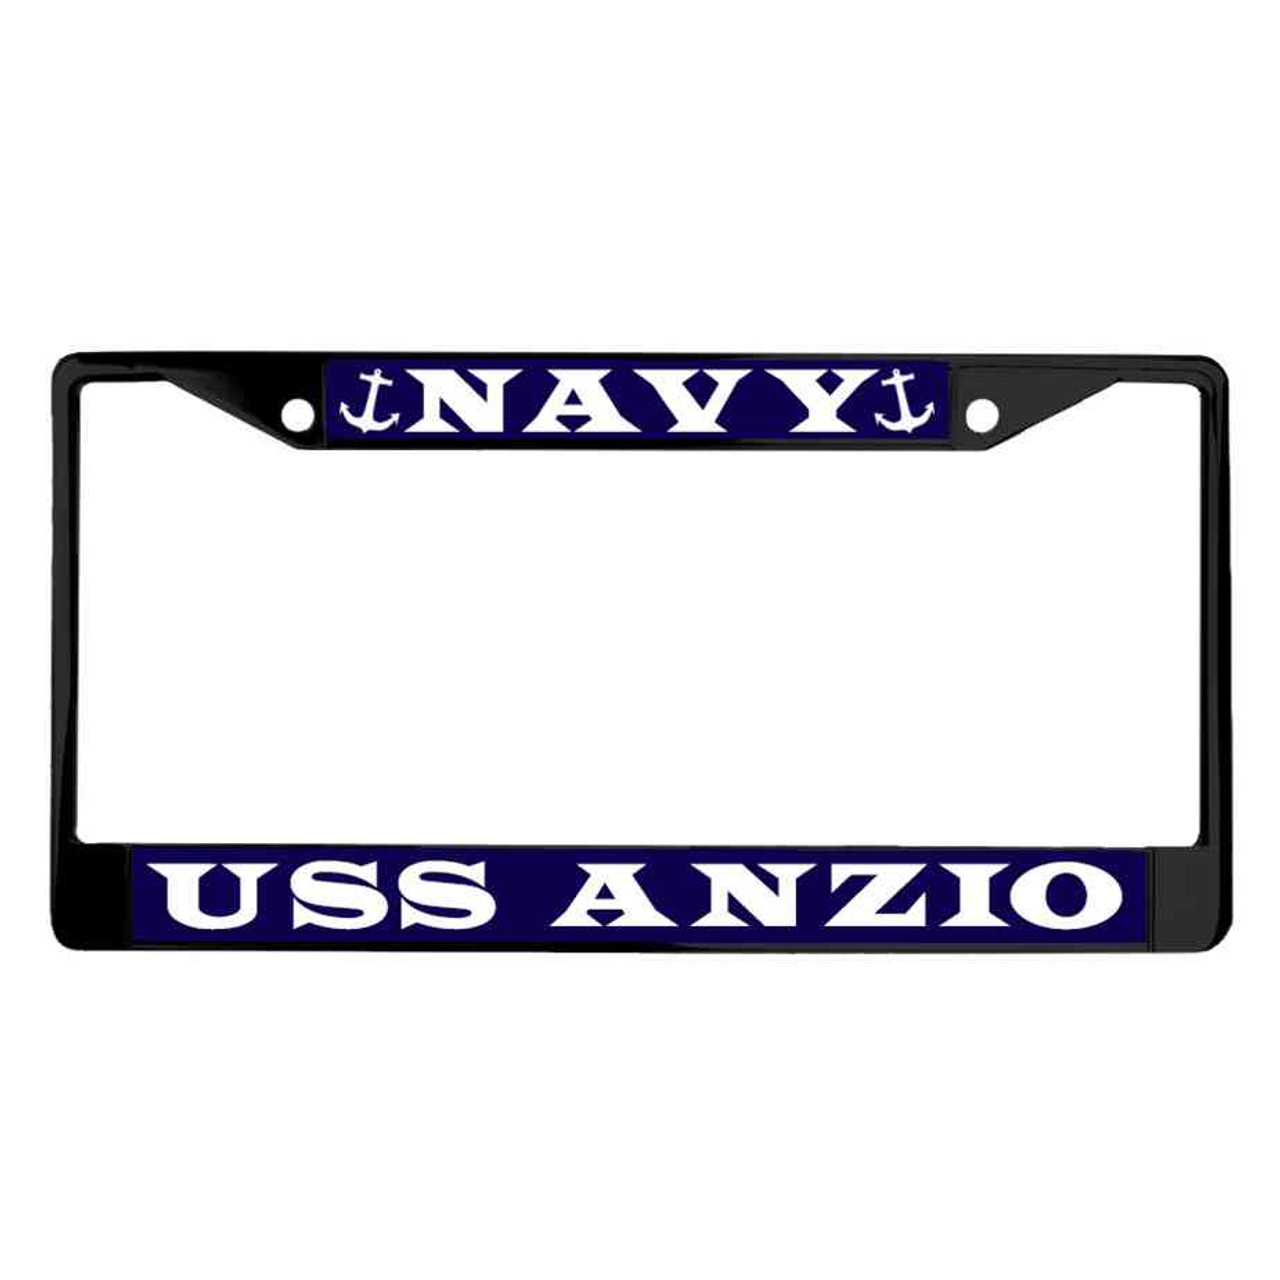 uss anzio powder coated license plate frame